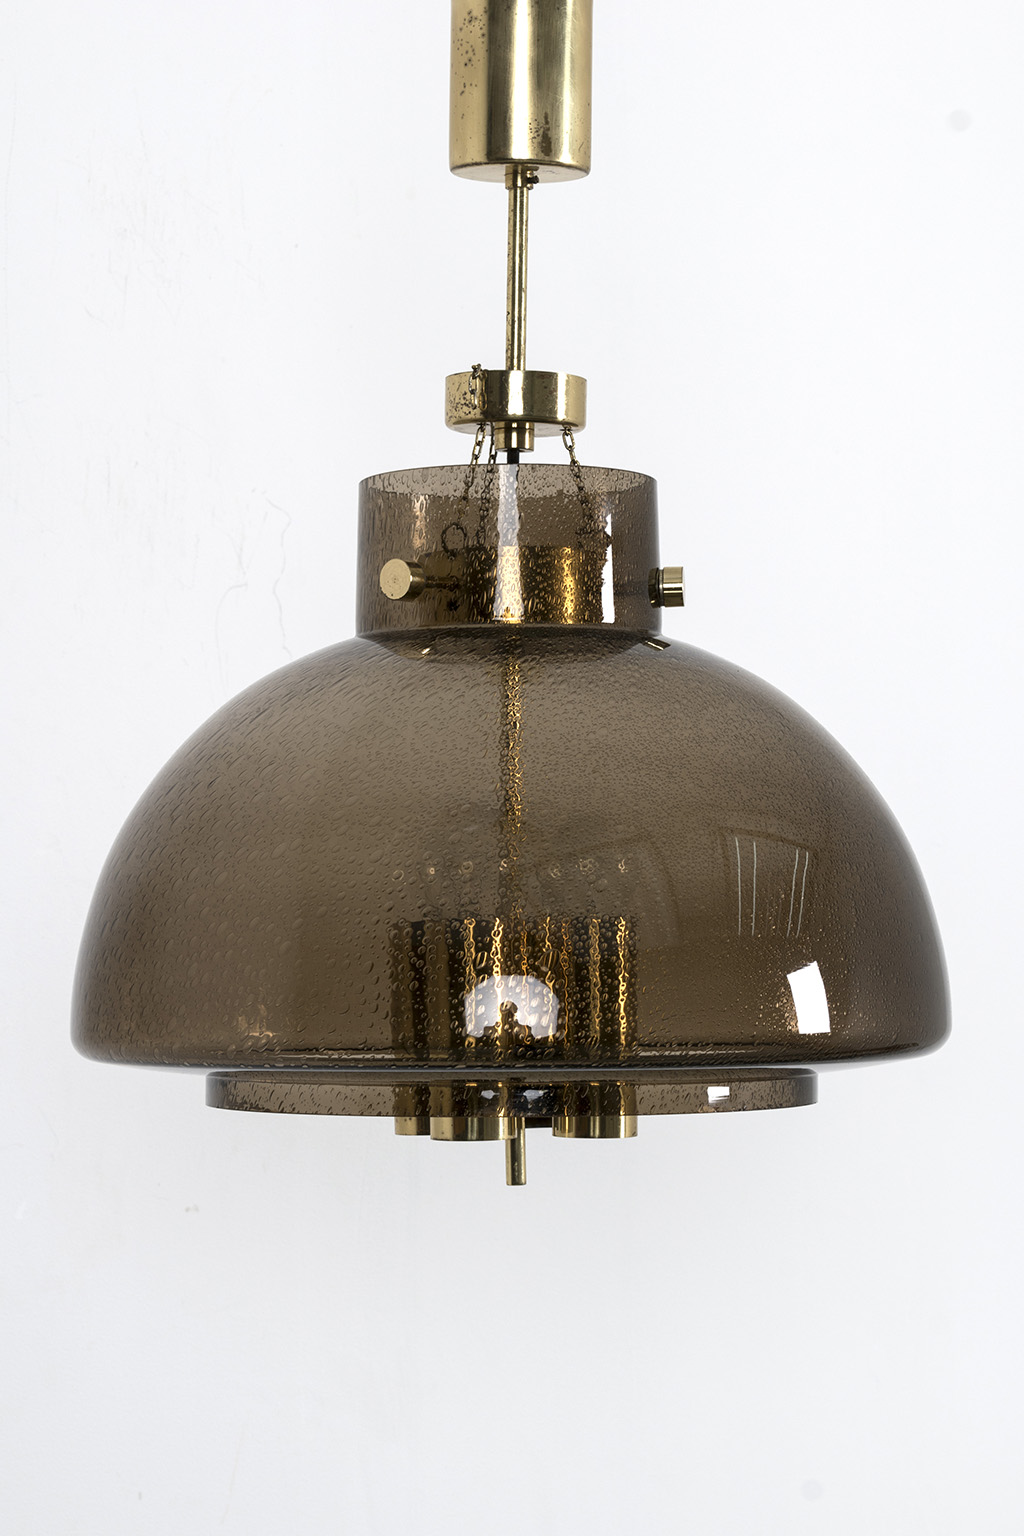 Glashutte Limburg hanglamp